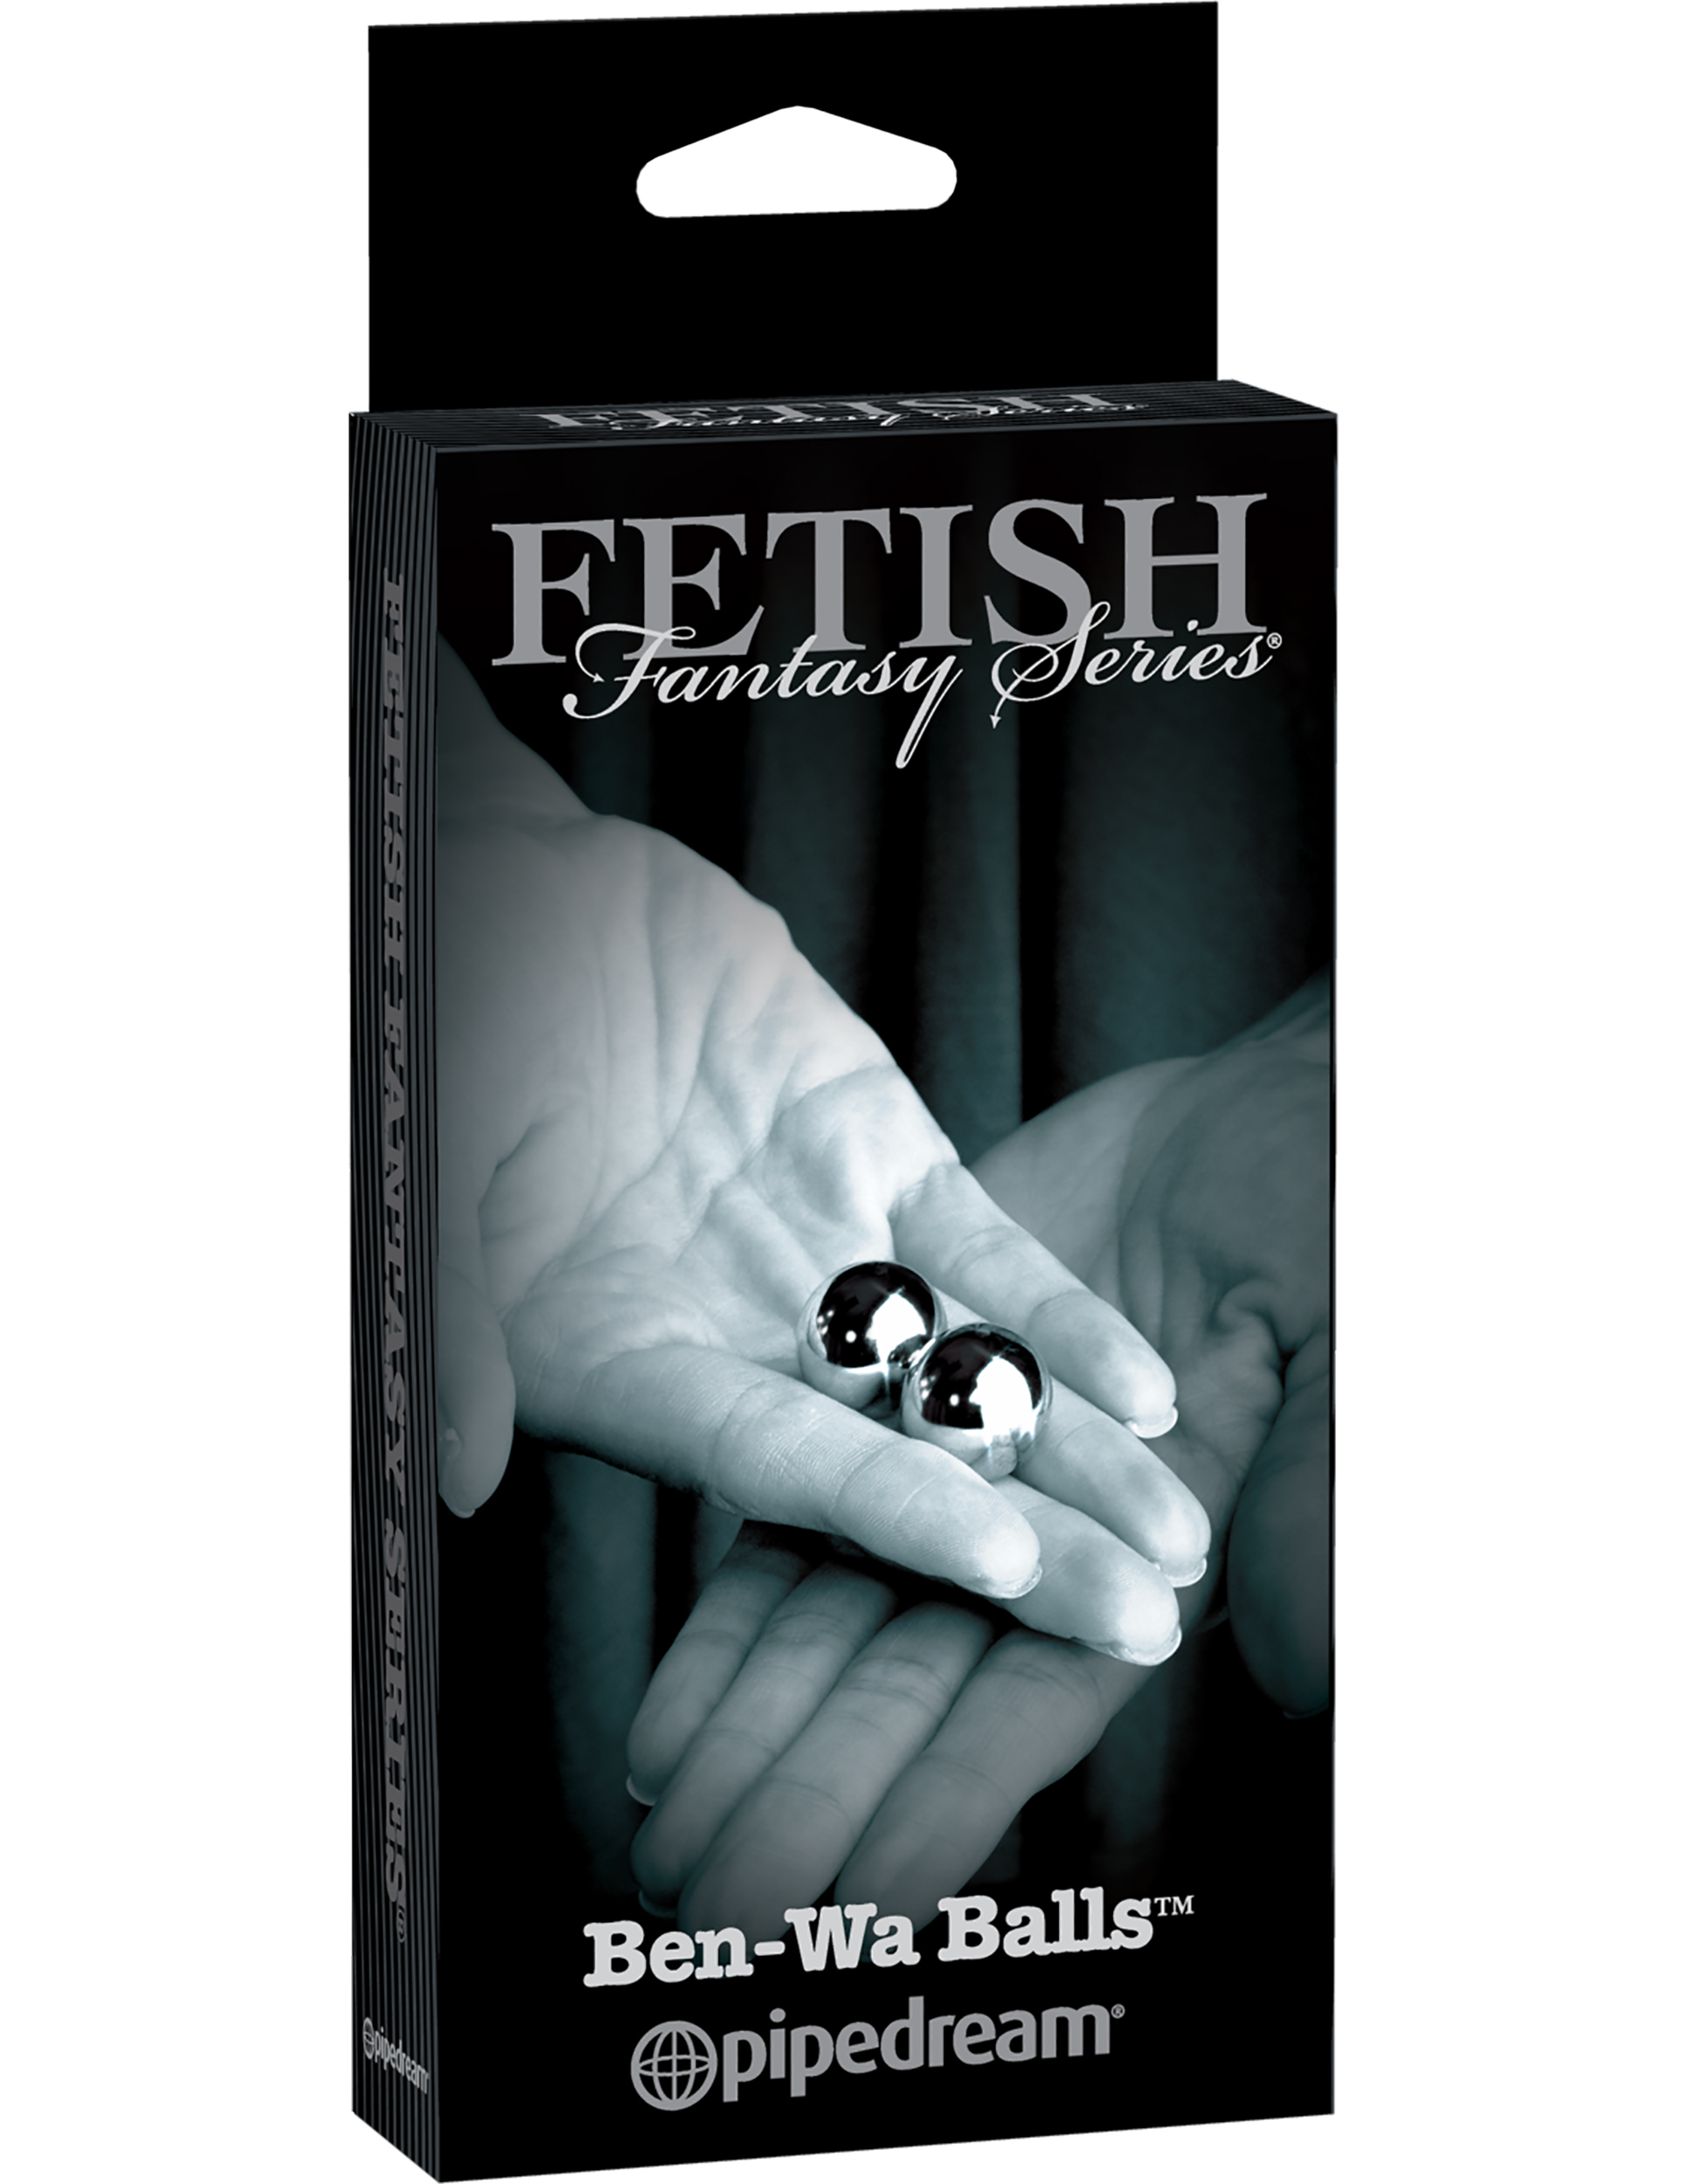 fetish fantasy series limited edition ben wa balls silver 